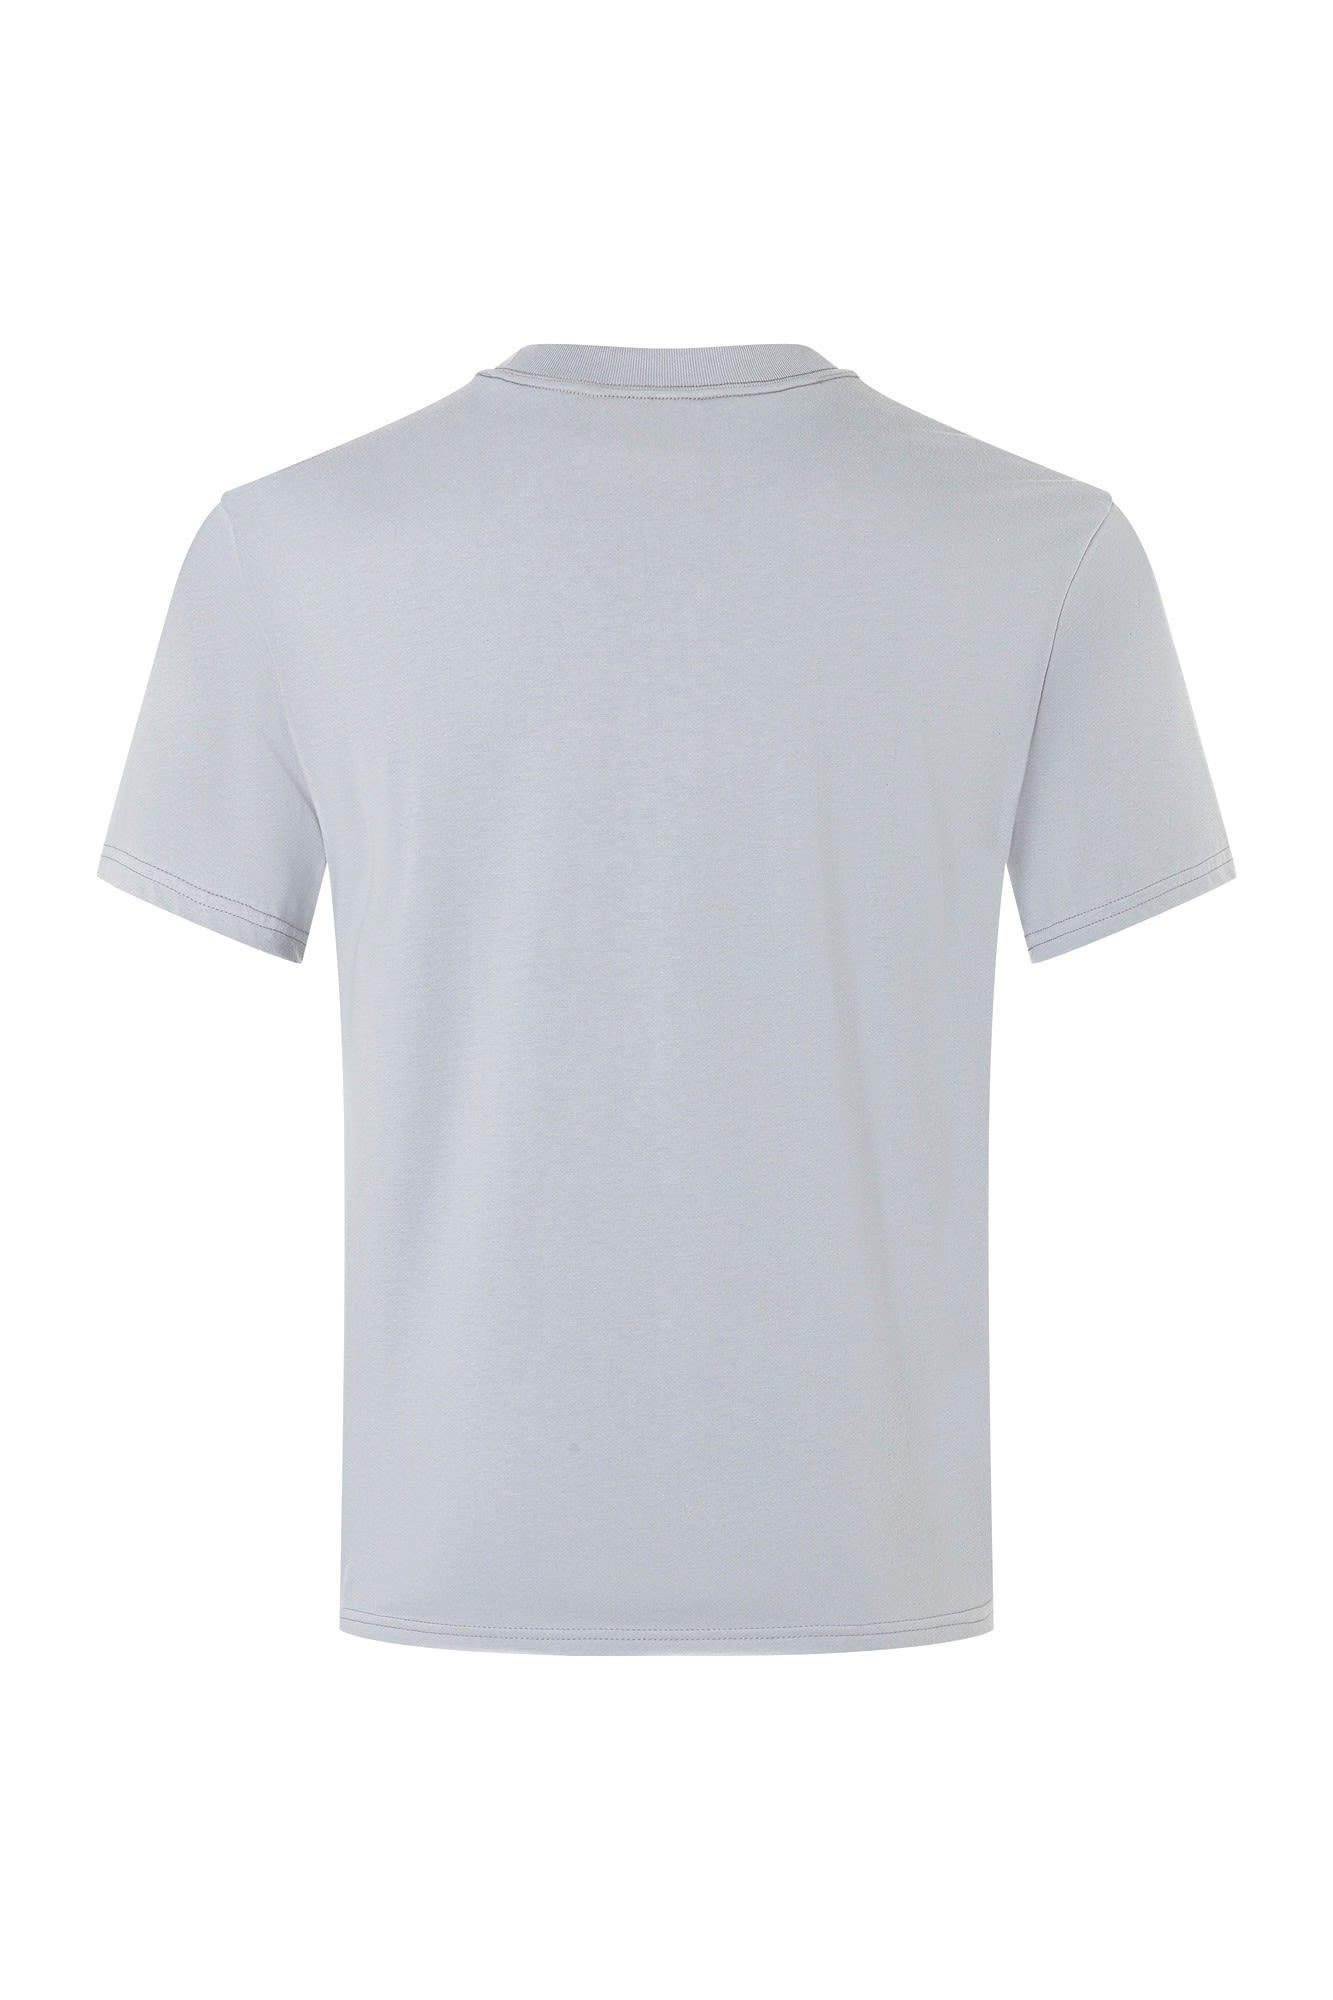 Marmot T-Shirt Marmot M Short-sleeve Coastal Tee Sleet Herren